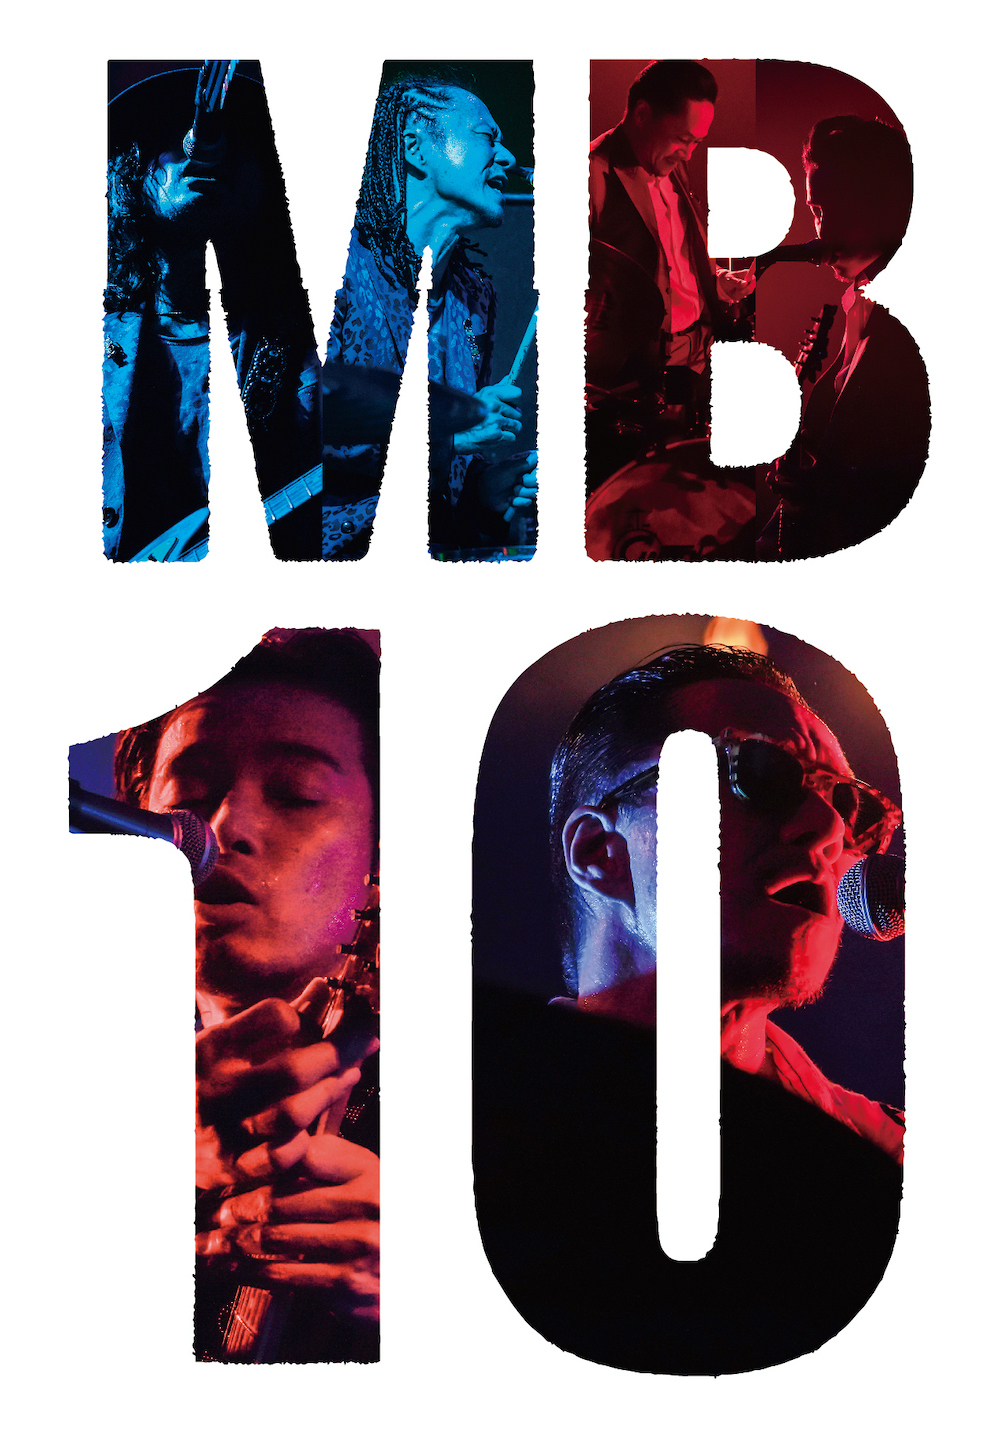 MANNISH BOYS 斉藤和義LIVE BOX dvd マニッシュボーイズ - ミュージック